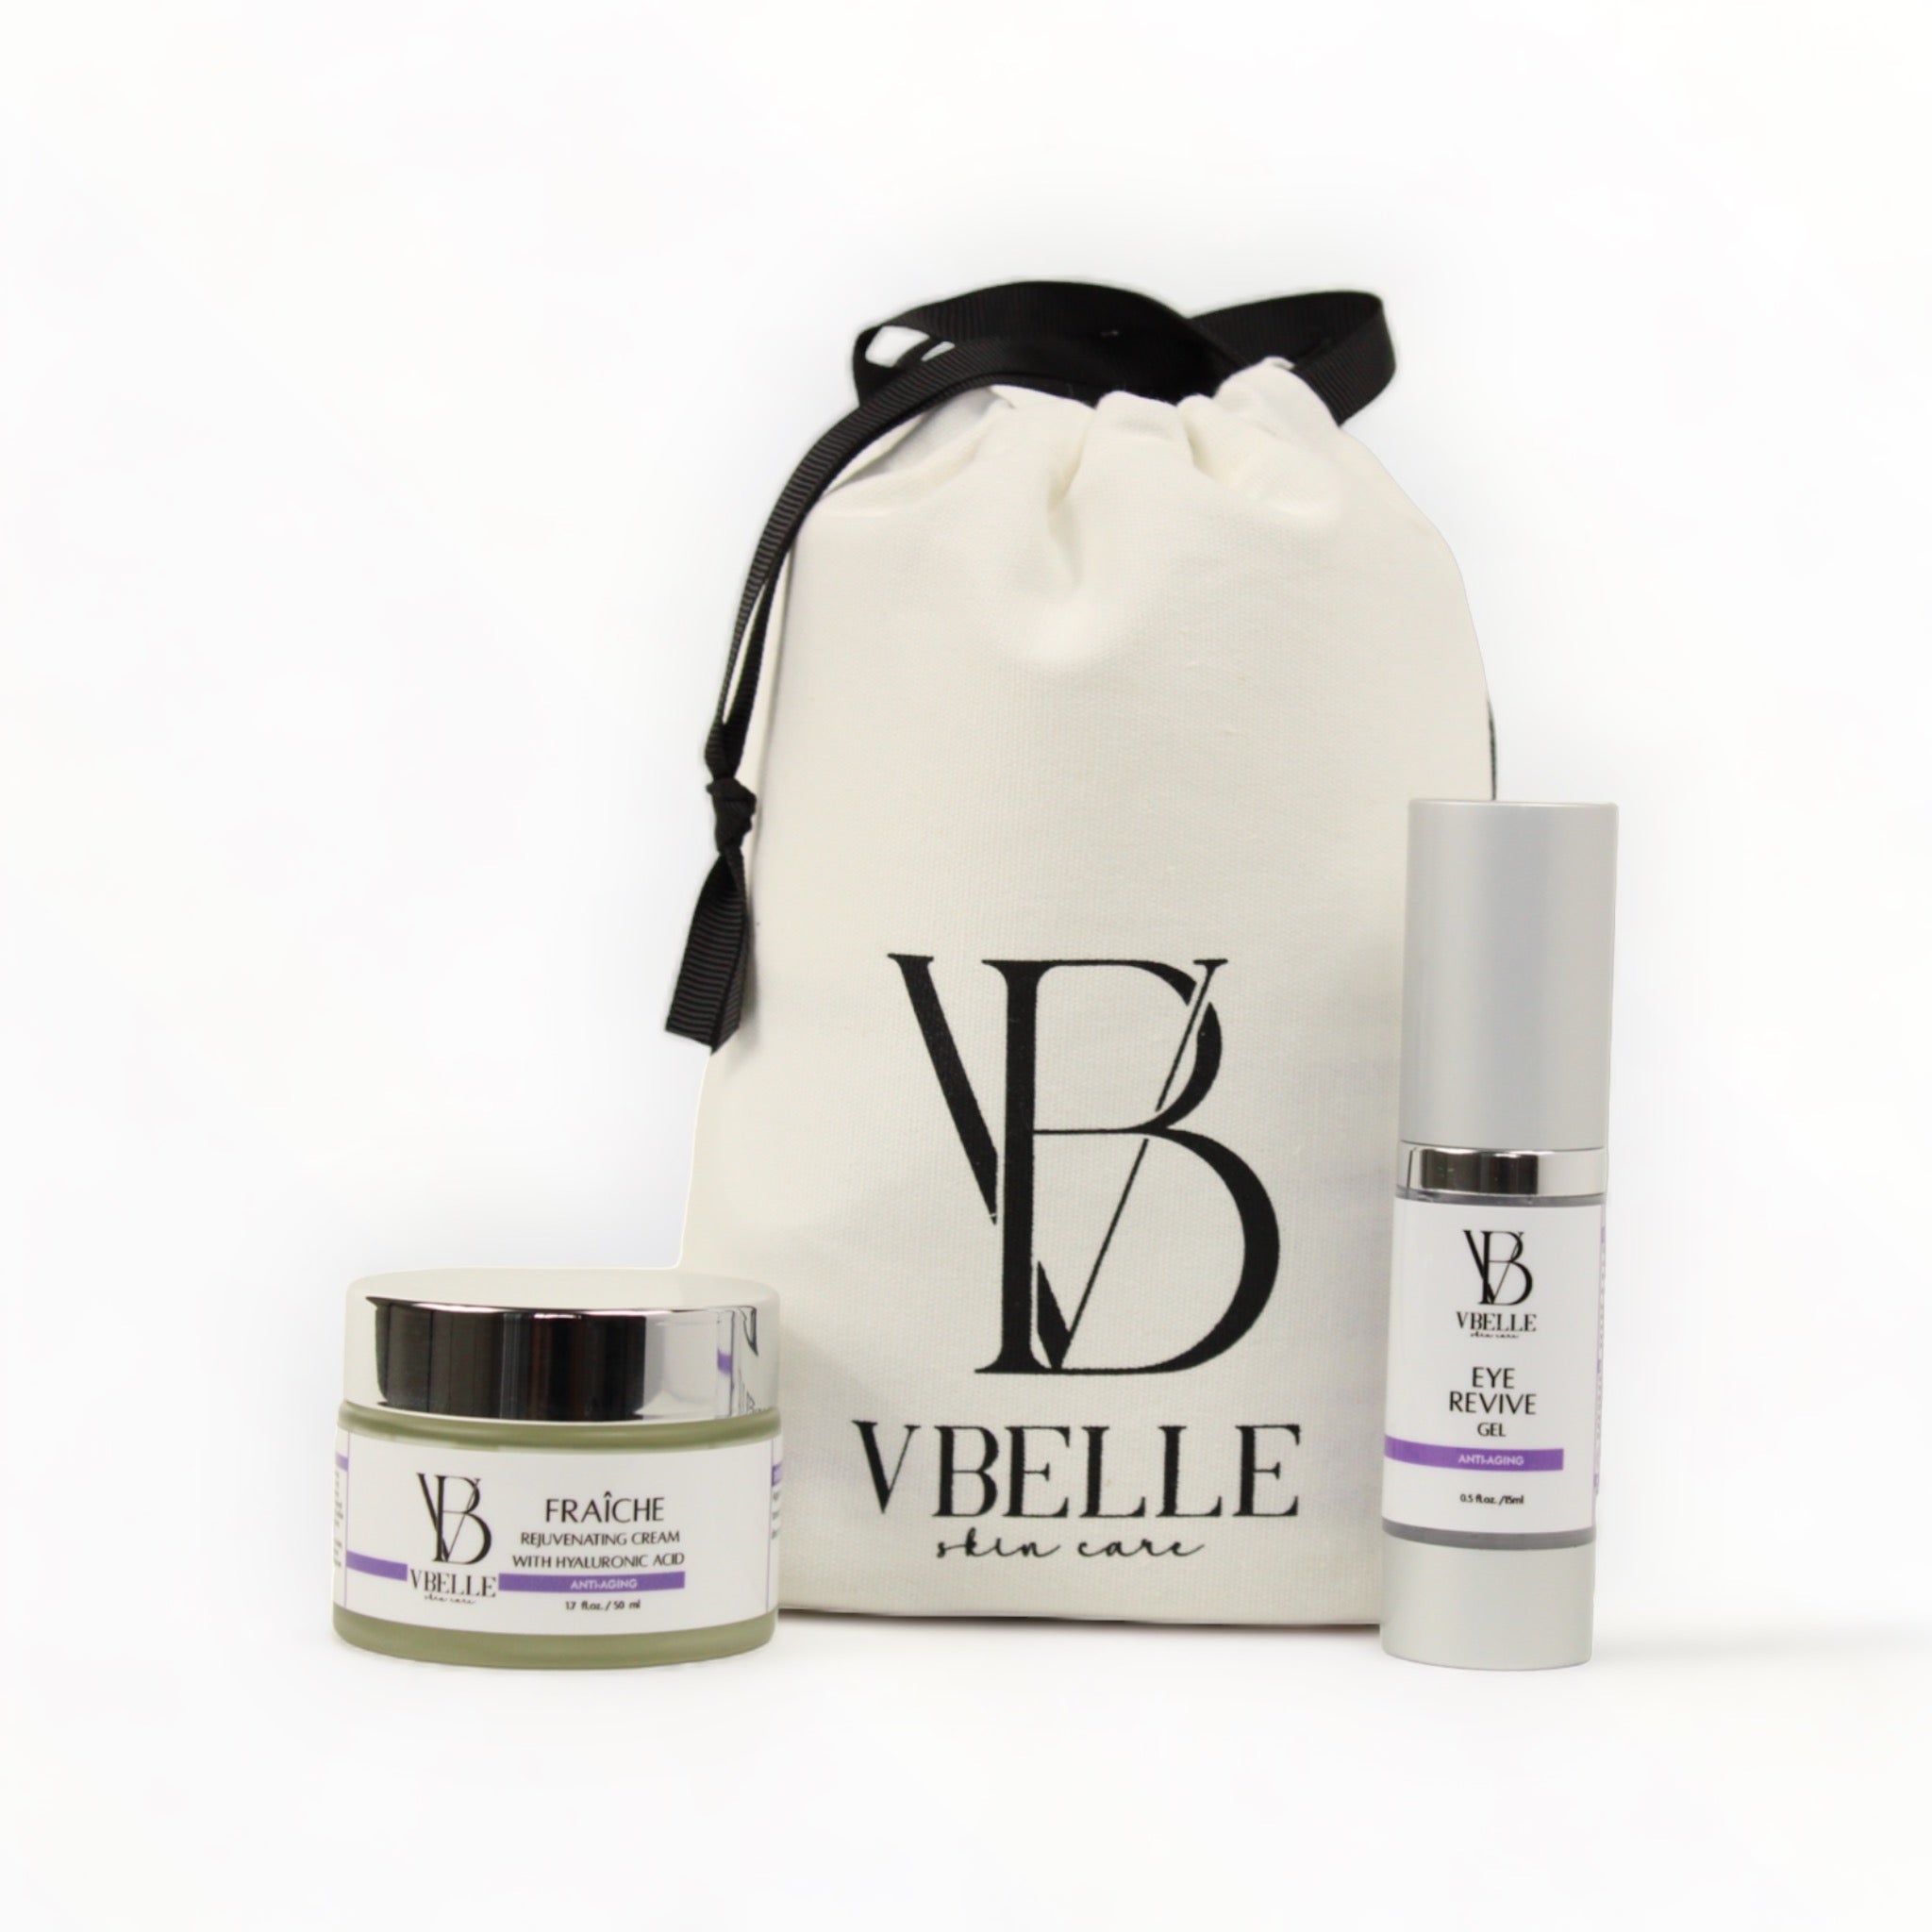 a jar of fraîche and bottle of eye gel in front of a Vbelle Skin Care white gift bag